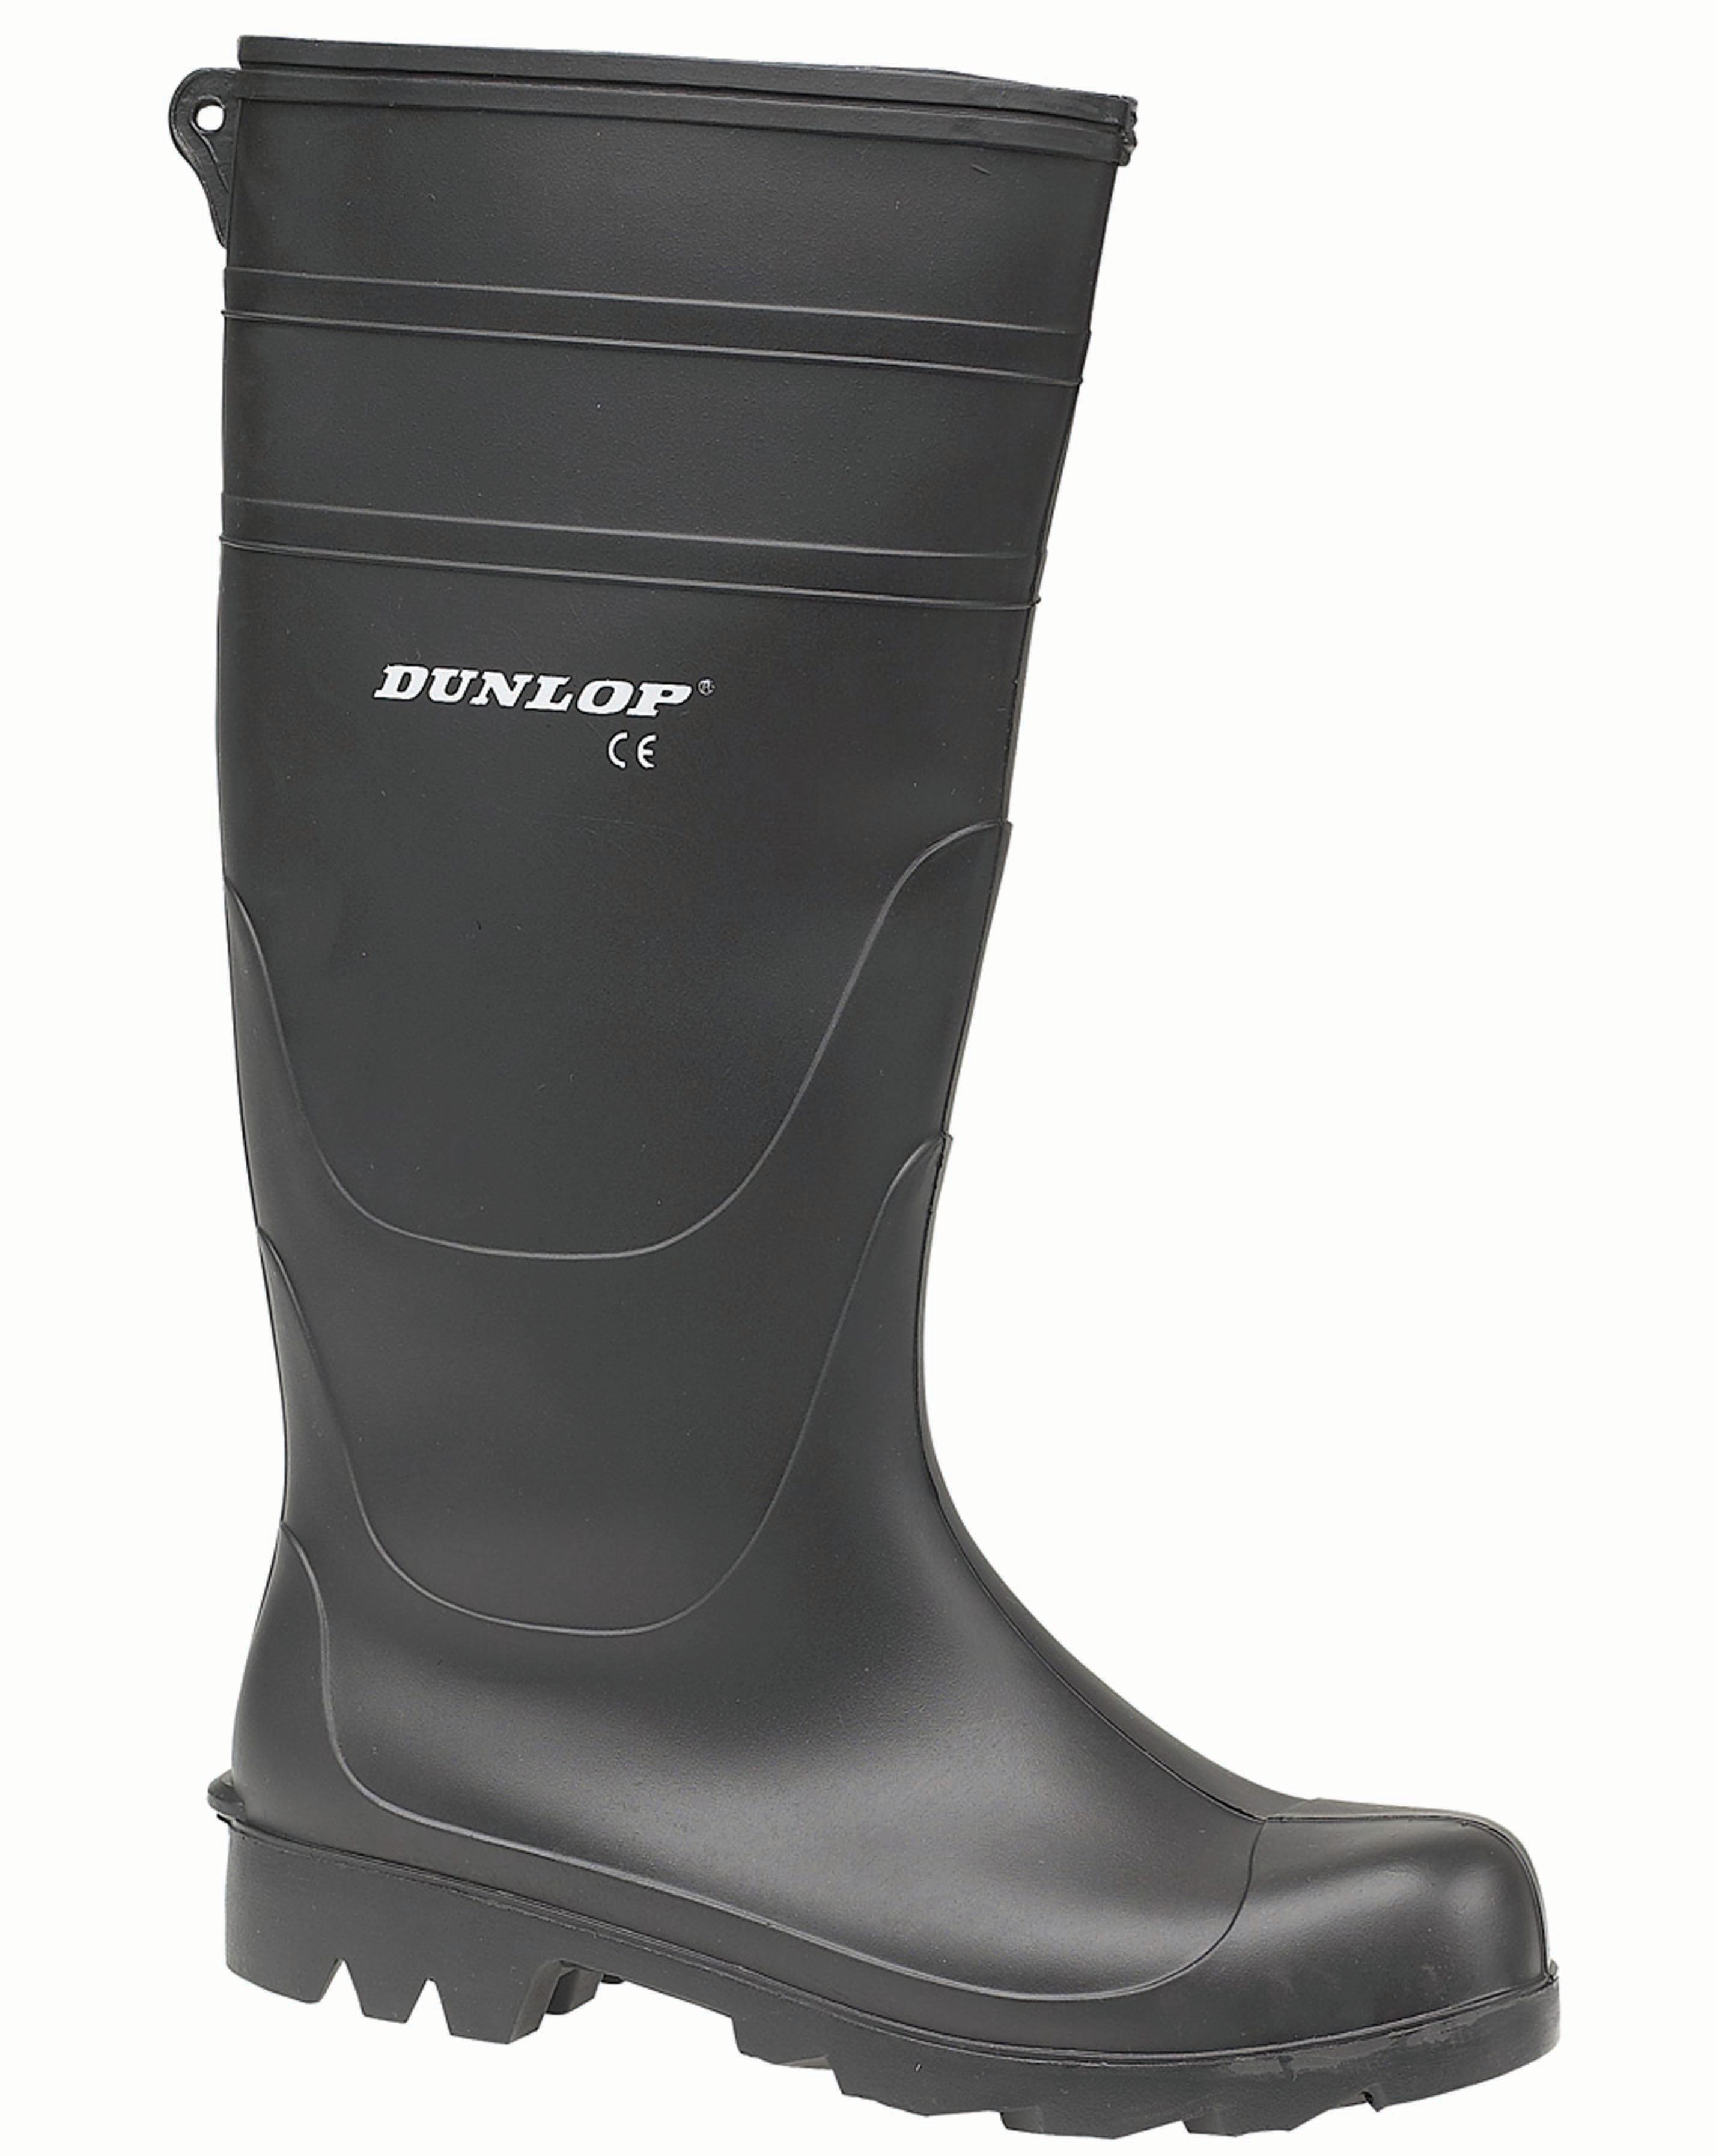 Image of Dunlop Universal PVC Wellington Boot - Black Size 9